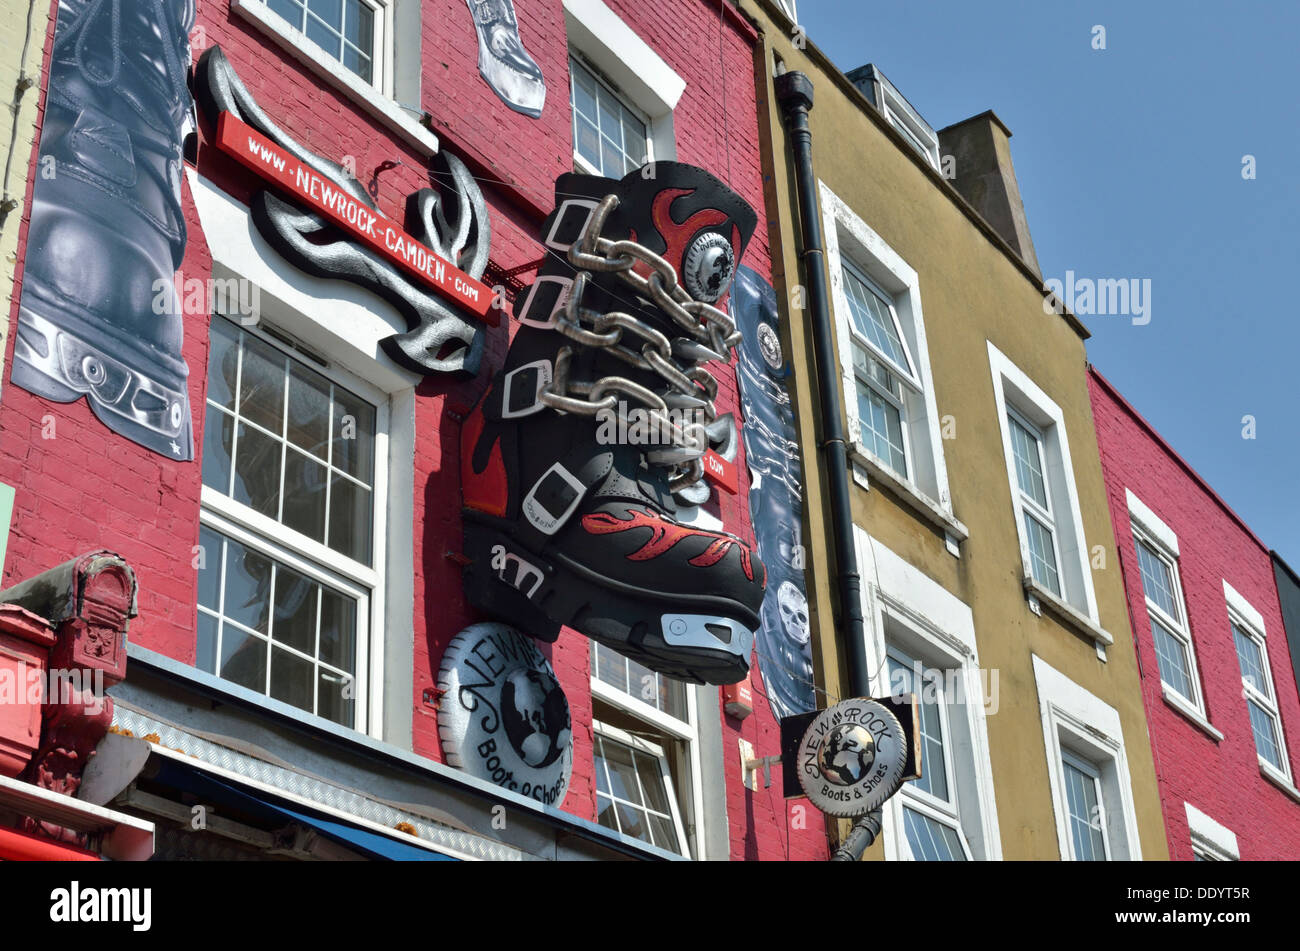 New Rock Store shoe shop in Camden Town, London, UK. Stock Photo